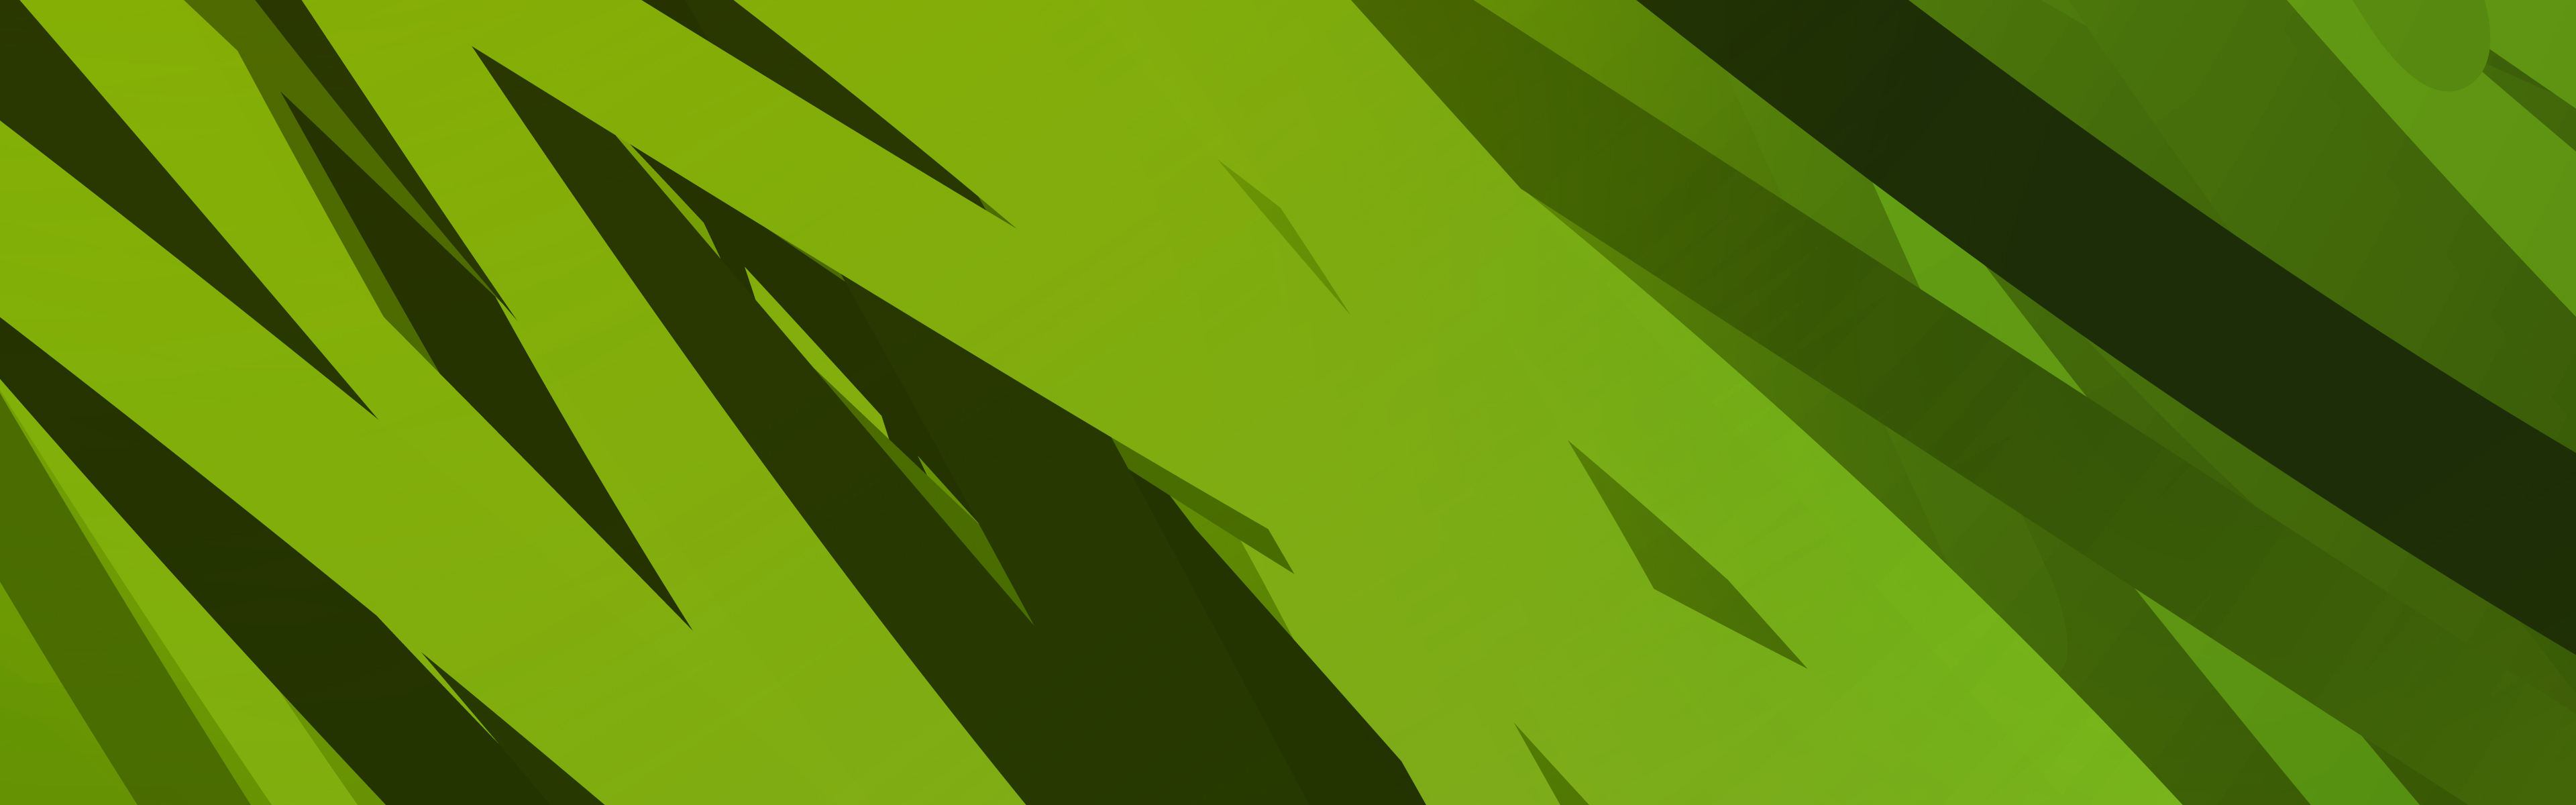 green, Abstract, Multiscreen Wallpaper